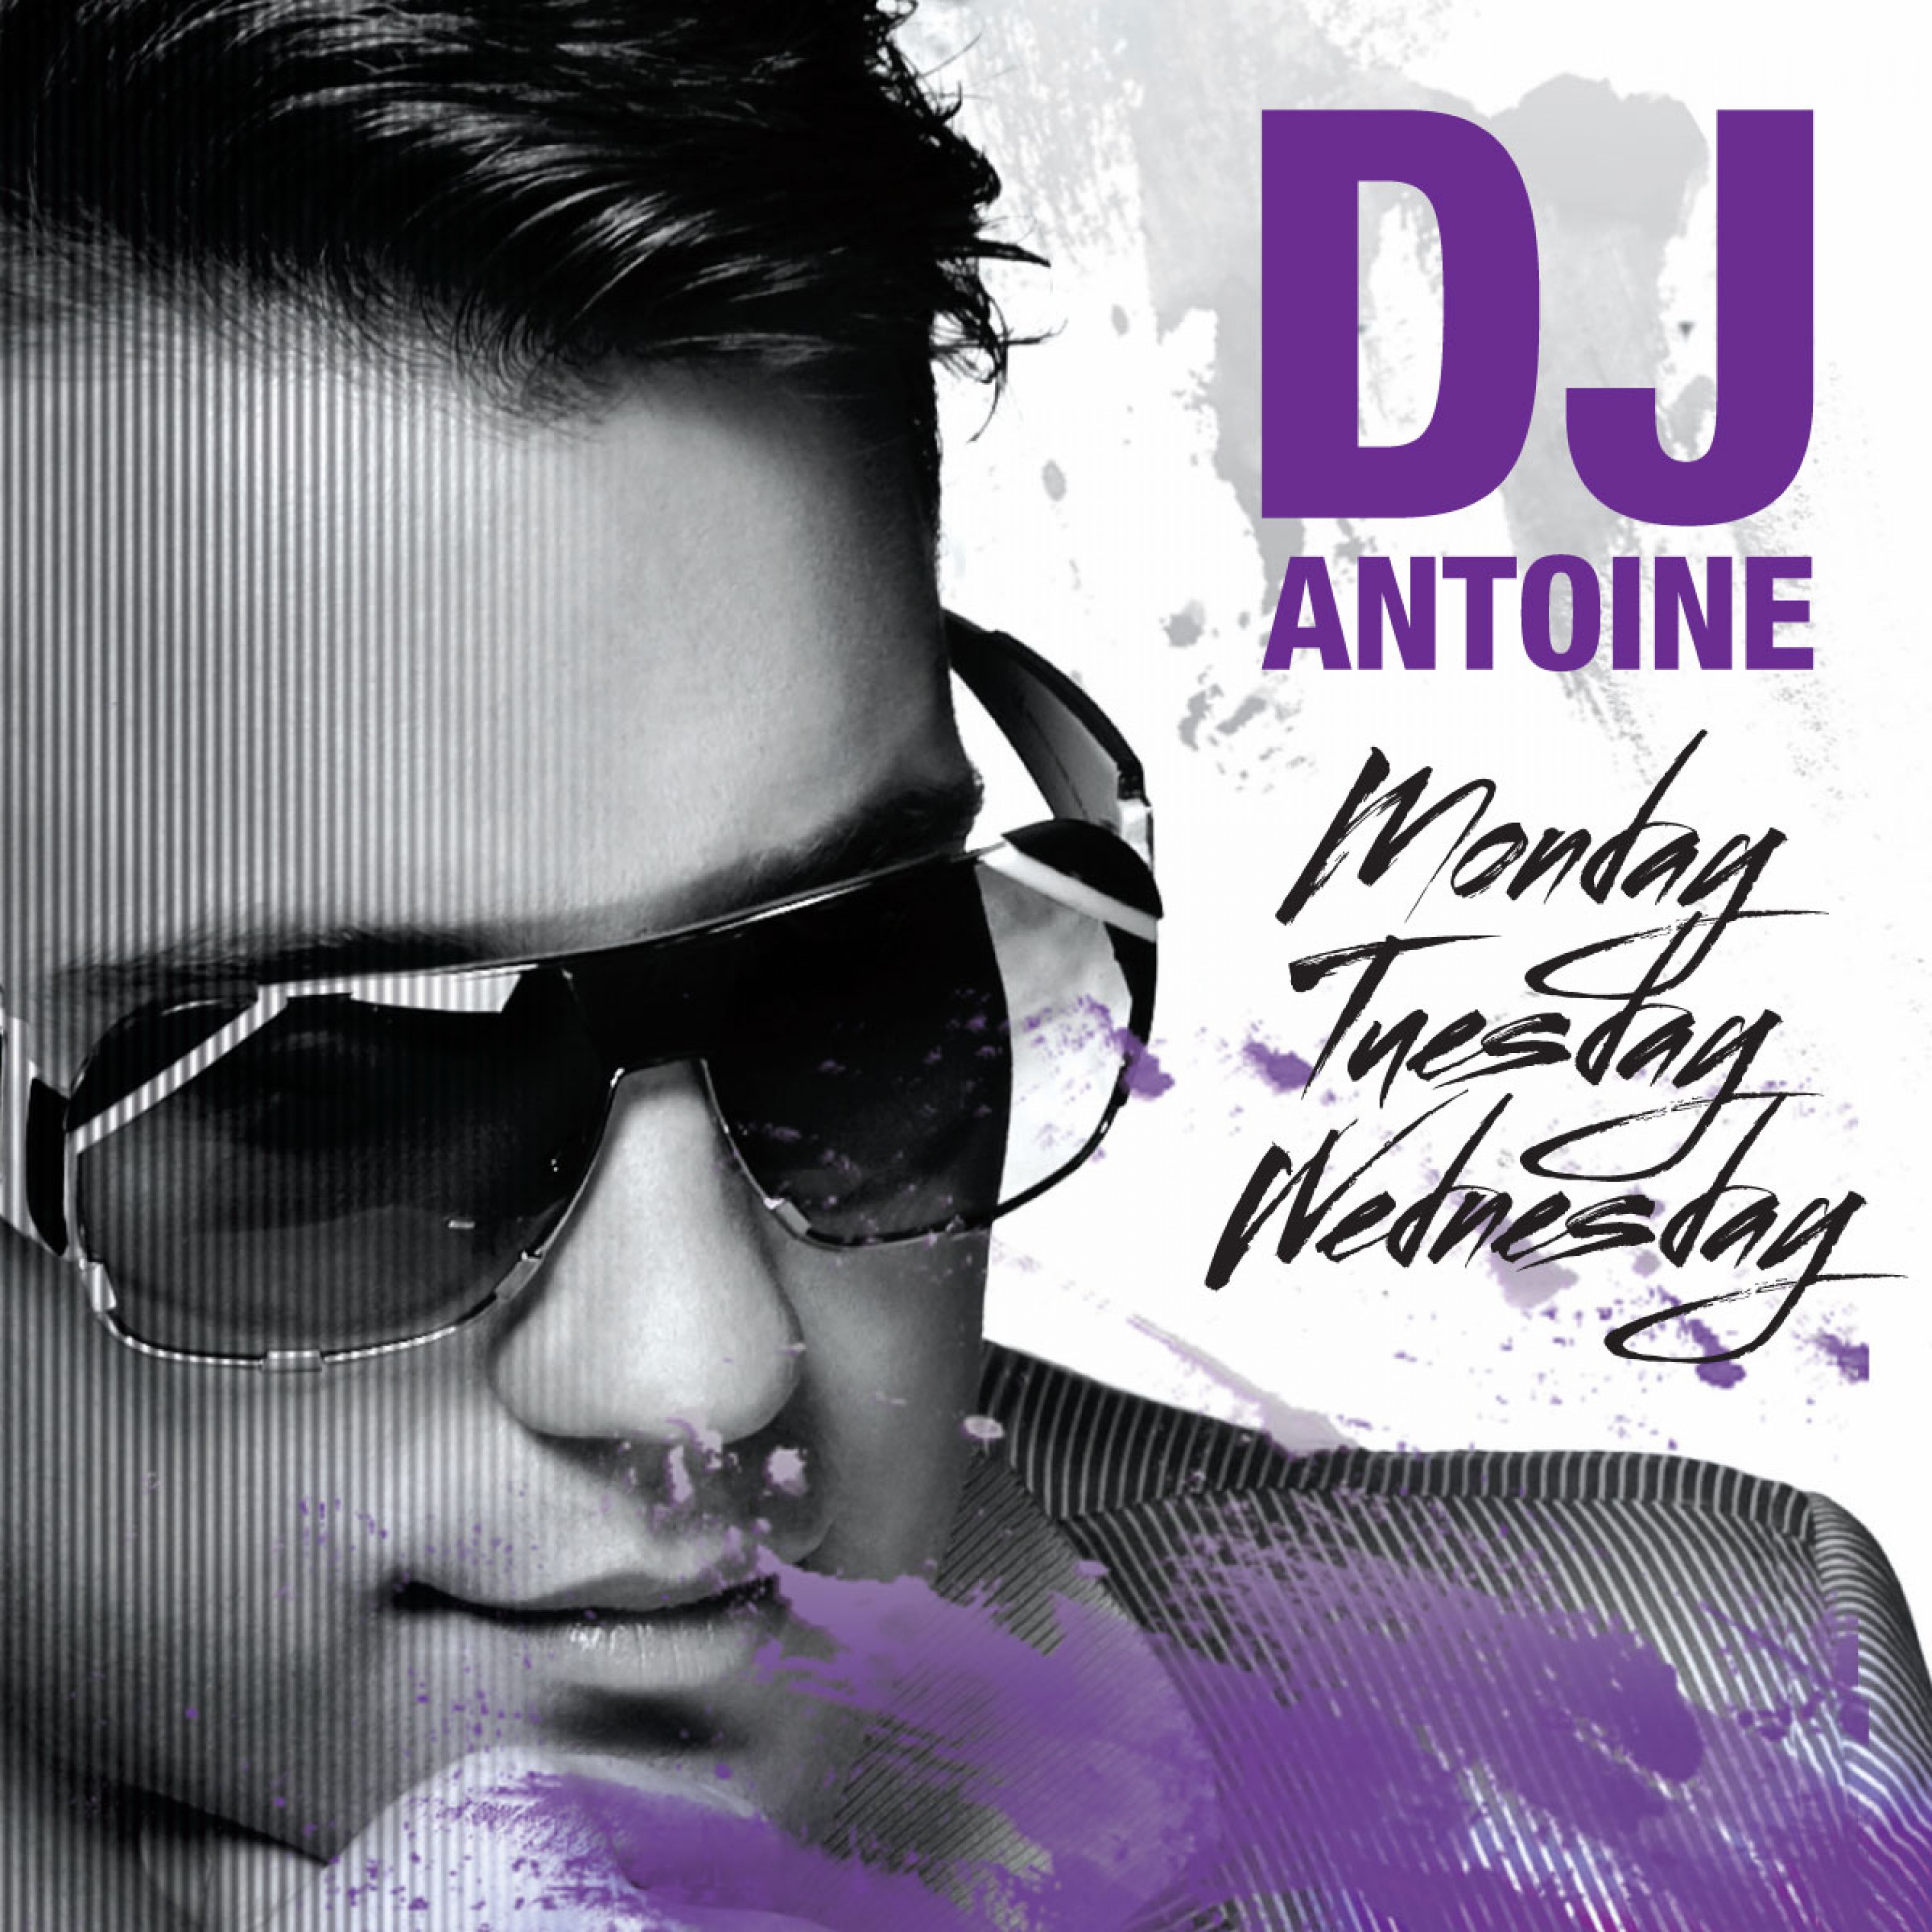 Monday, Tuesday, Wednesday (DJ Antoine vs Mad Mark Instrumental Remix)